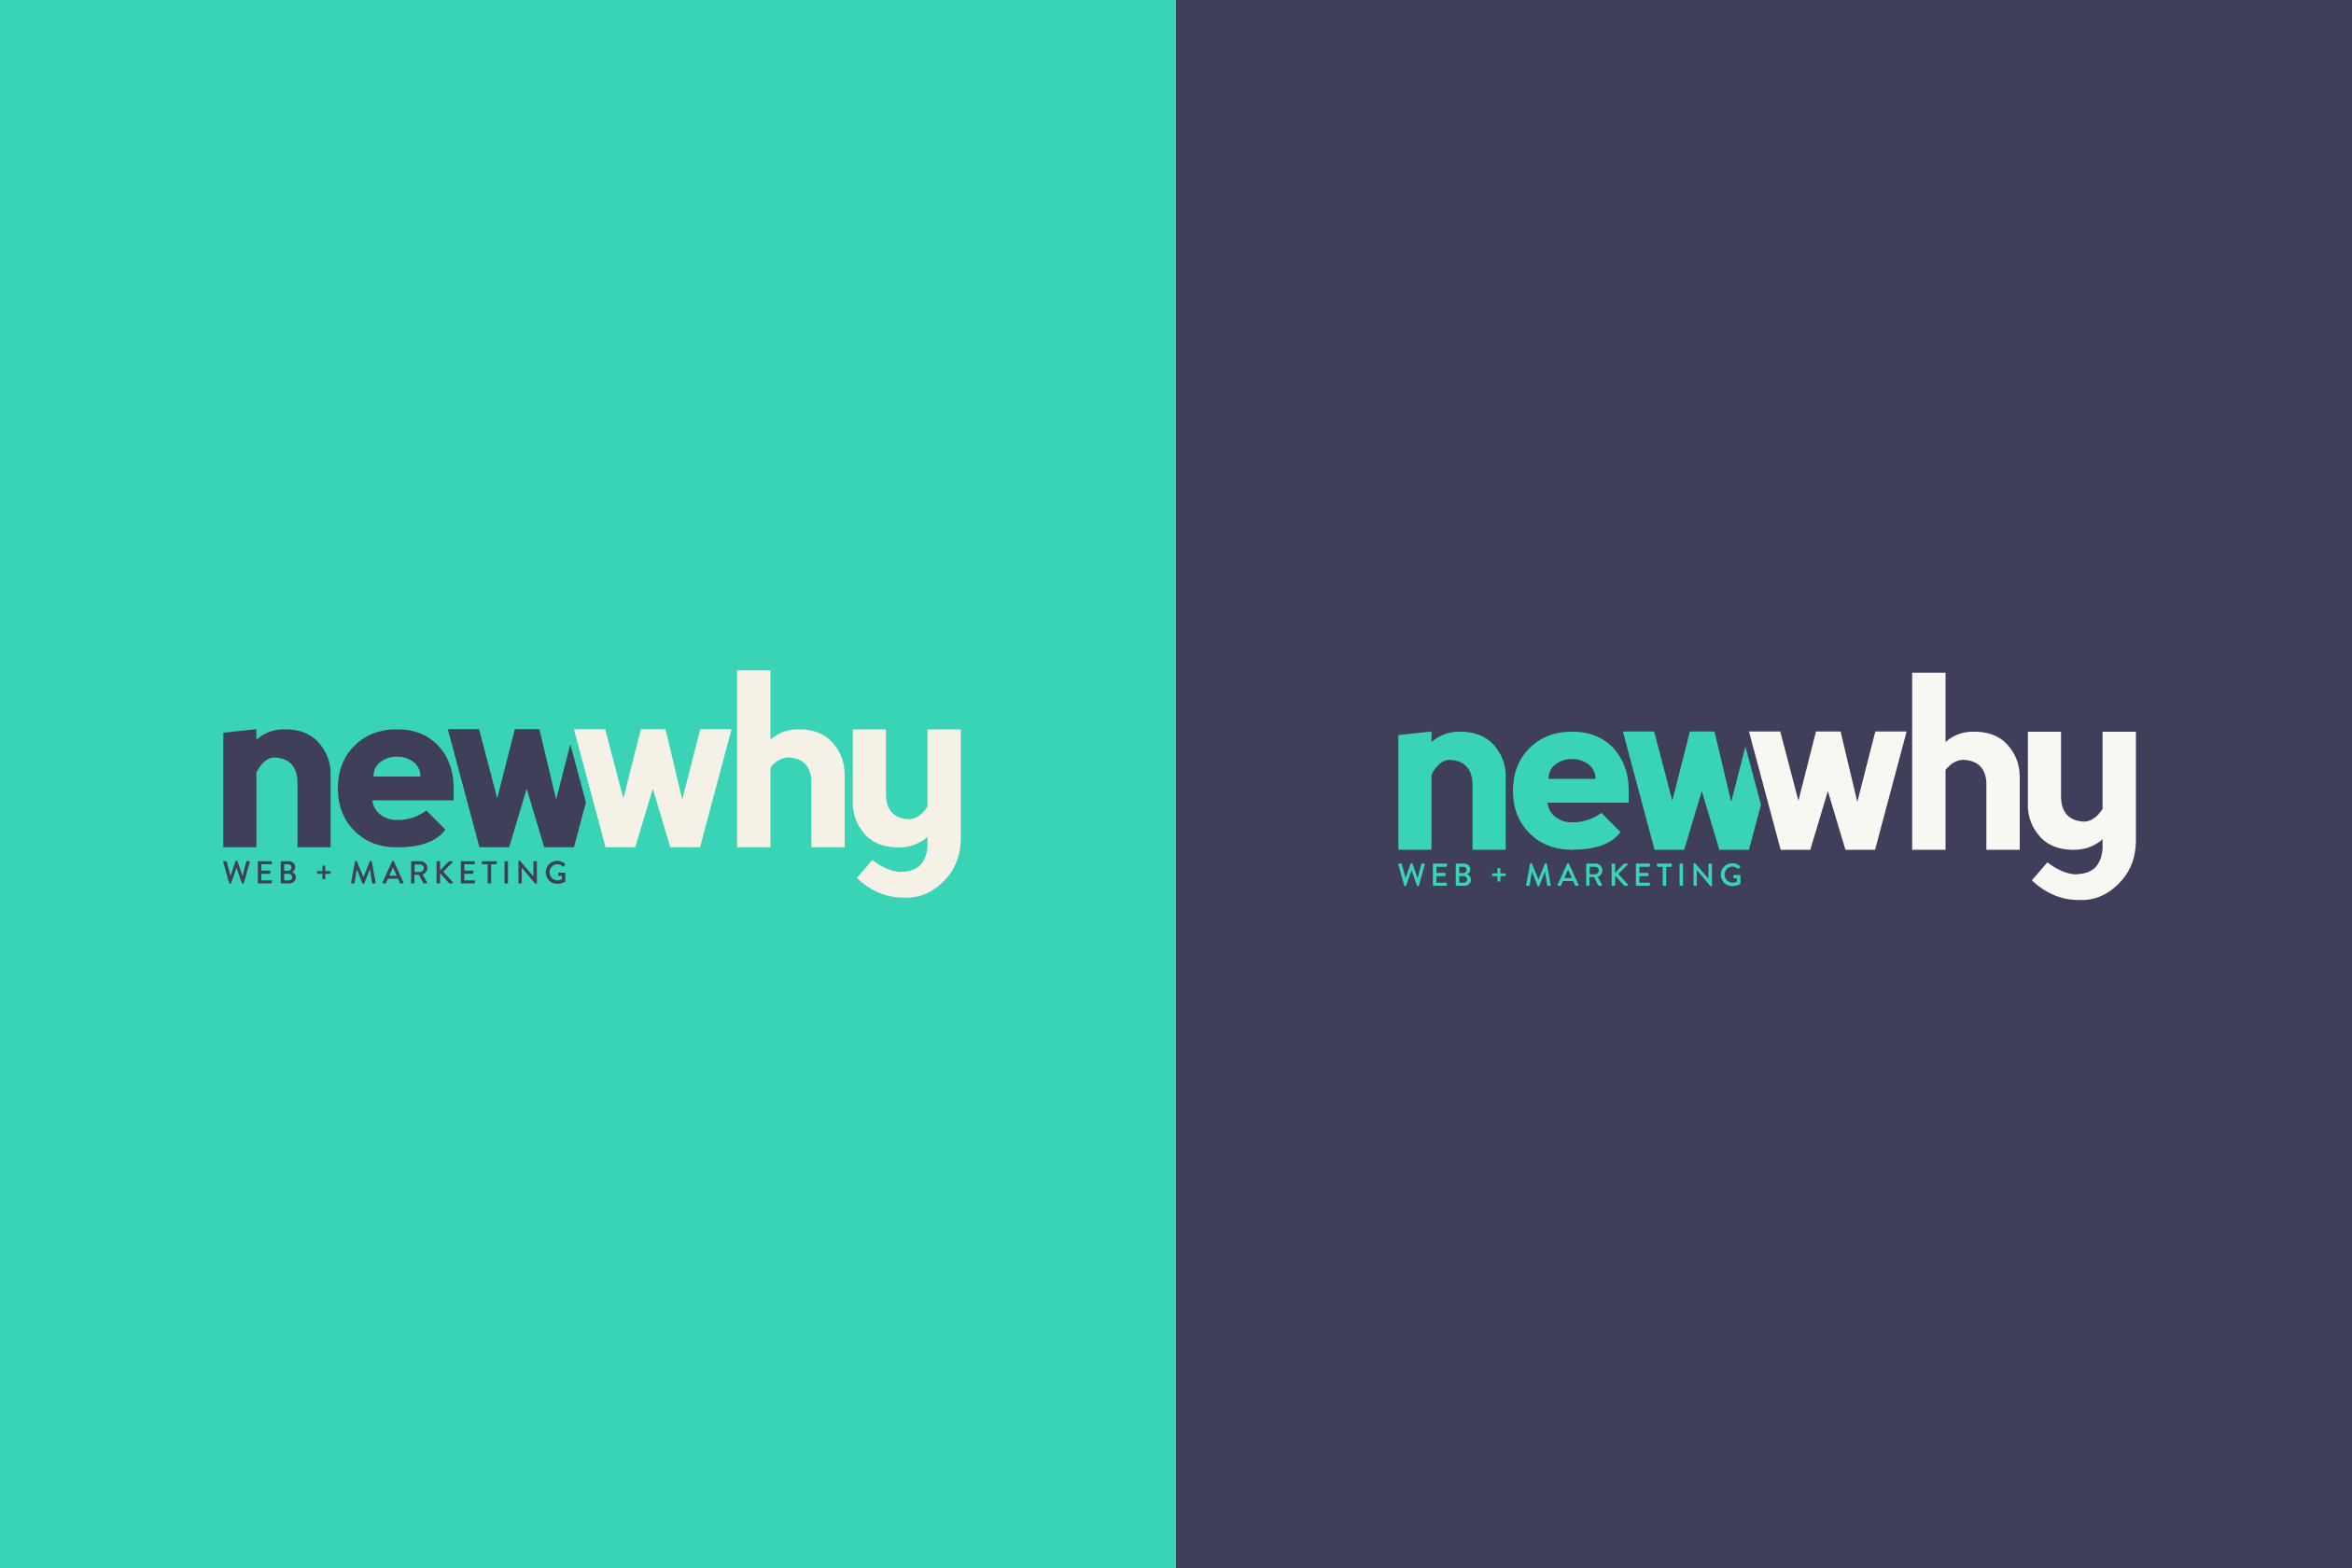 Why Logo - New Why — hoffmander